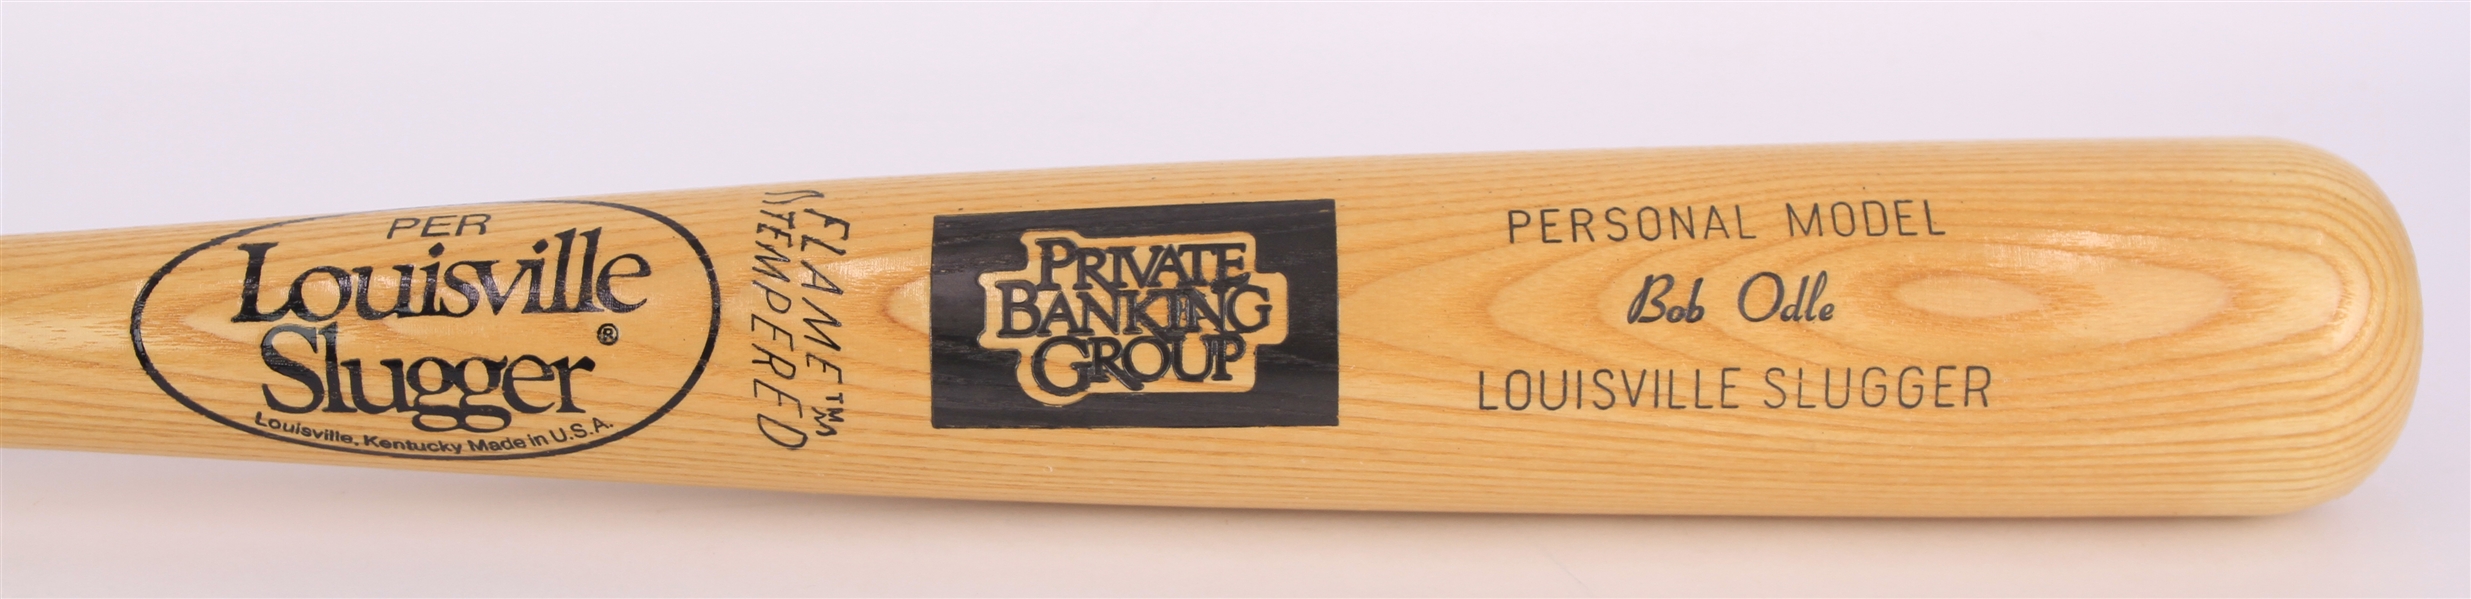 1993 Bob Odle Private Banking Group Personalized Louisville Slugger Bat